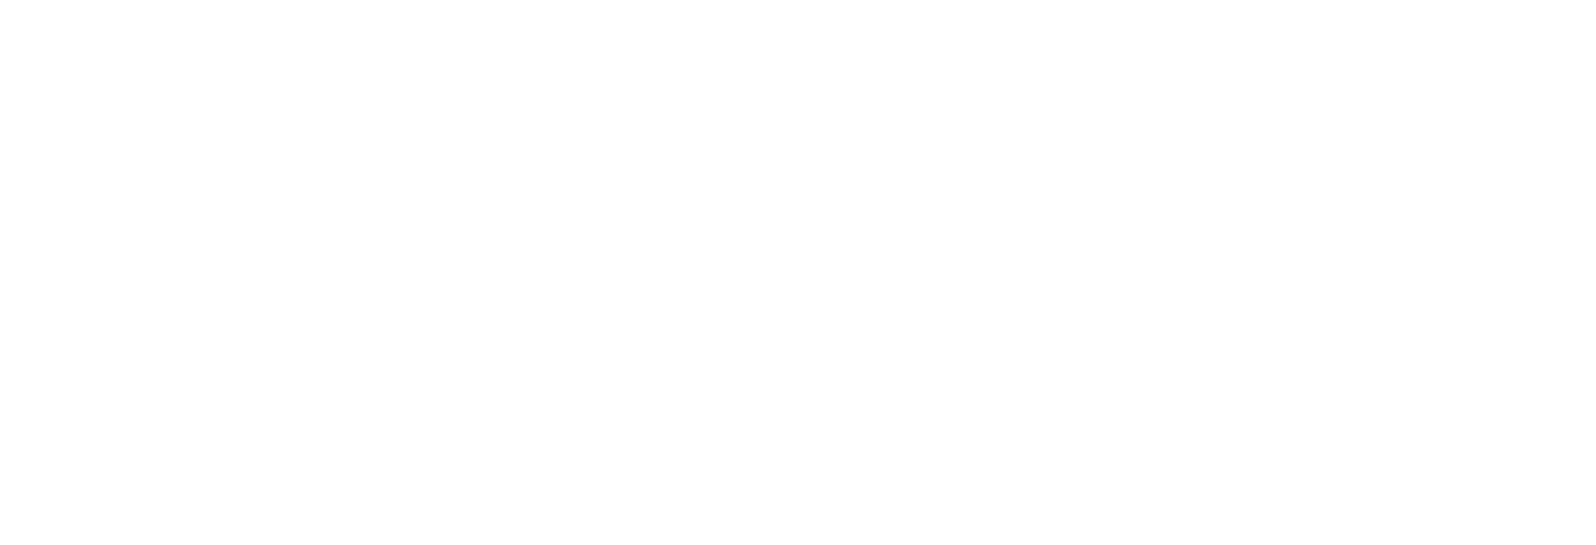 Boyaa Interactive logo large for dark backgrounds (transparent PNG)